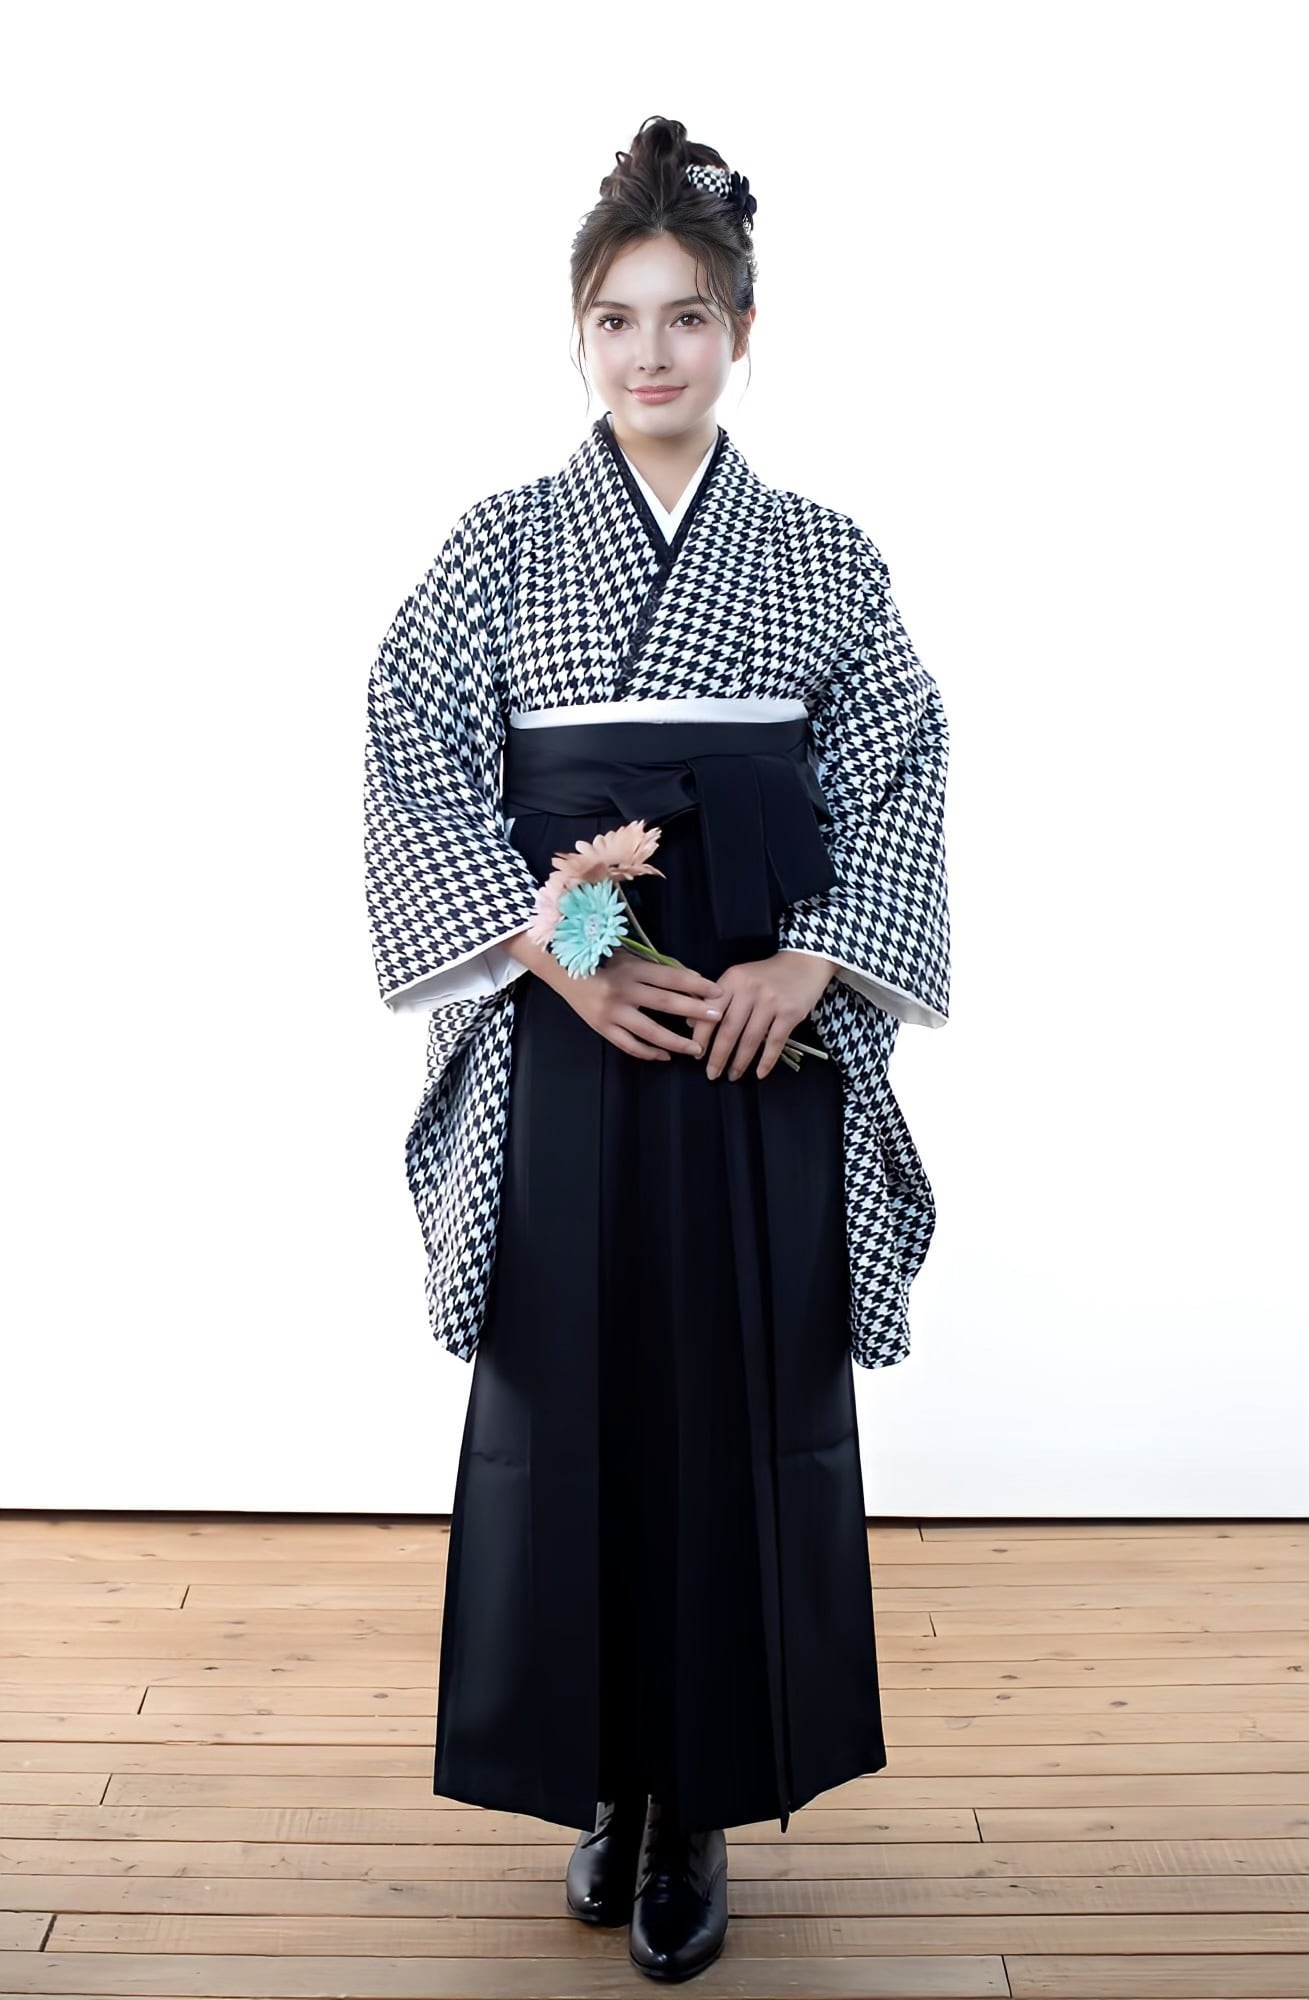 Kimono Sienne 卒業式袴3点セット 千鳥格子 黒 モノトーン 袴 二尺袖着物 袴 卒業式 | Kimono Sienne